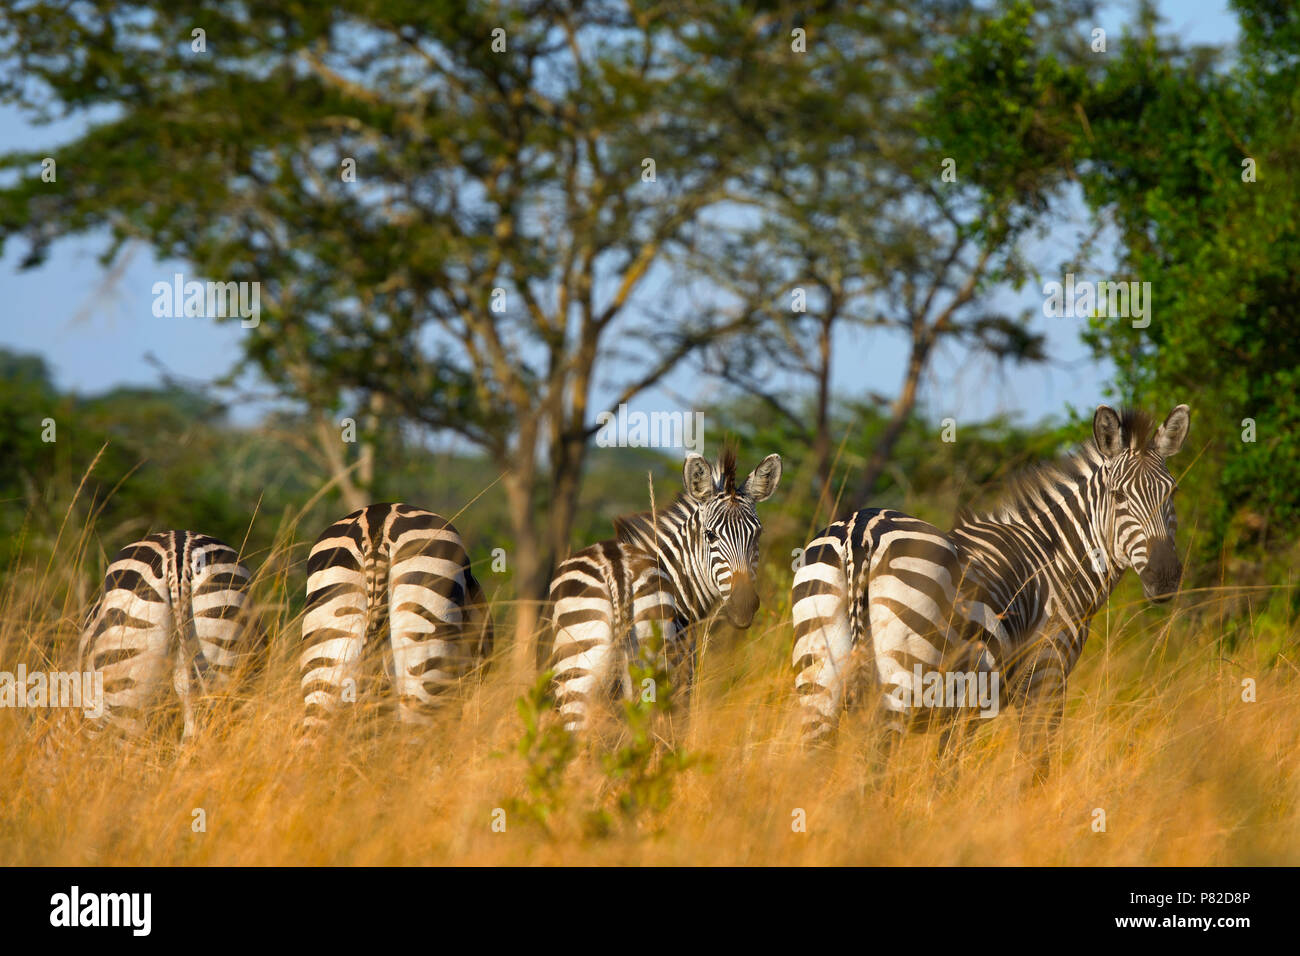 Zebra Equus quagga, cebras, en el Parque Nacional del Lago Mburo, Uganda, África Oriental Foto de stock